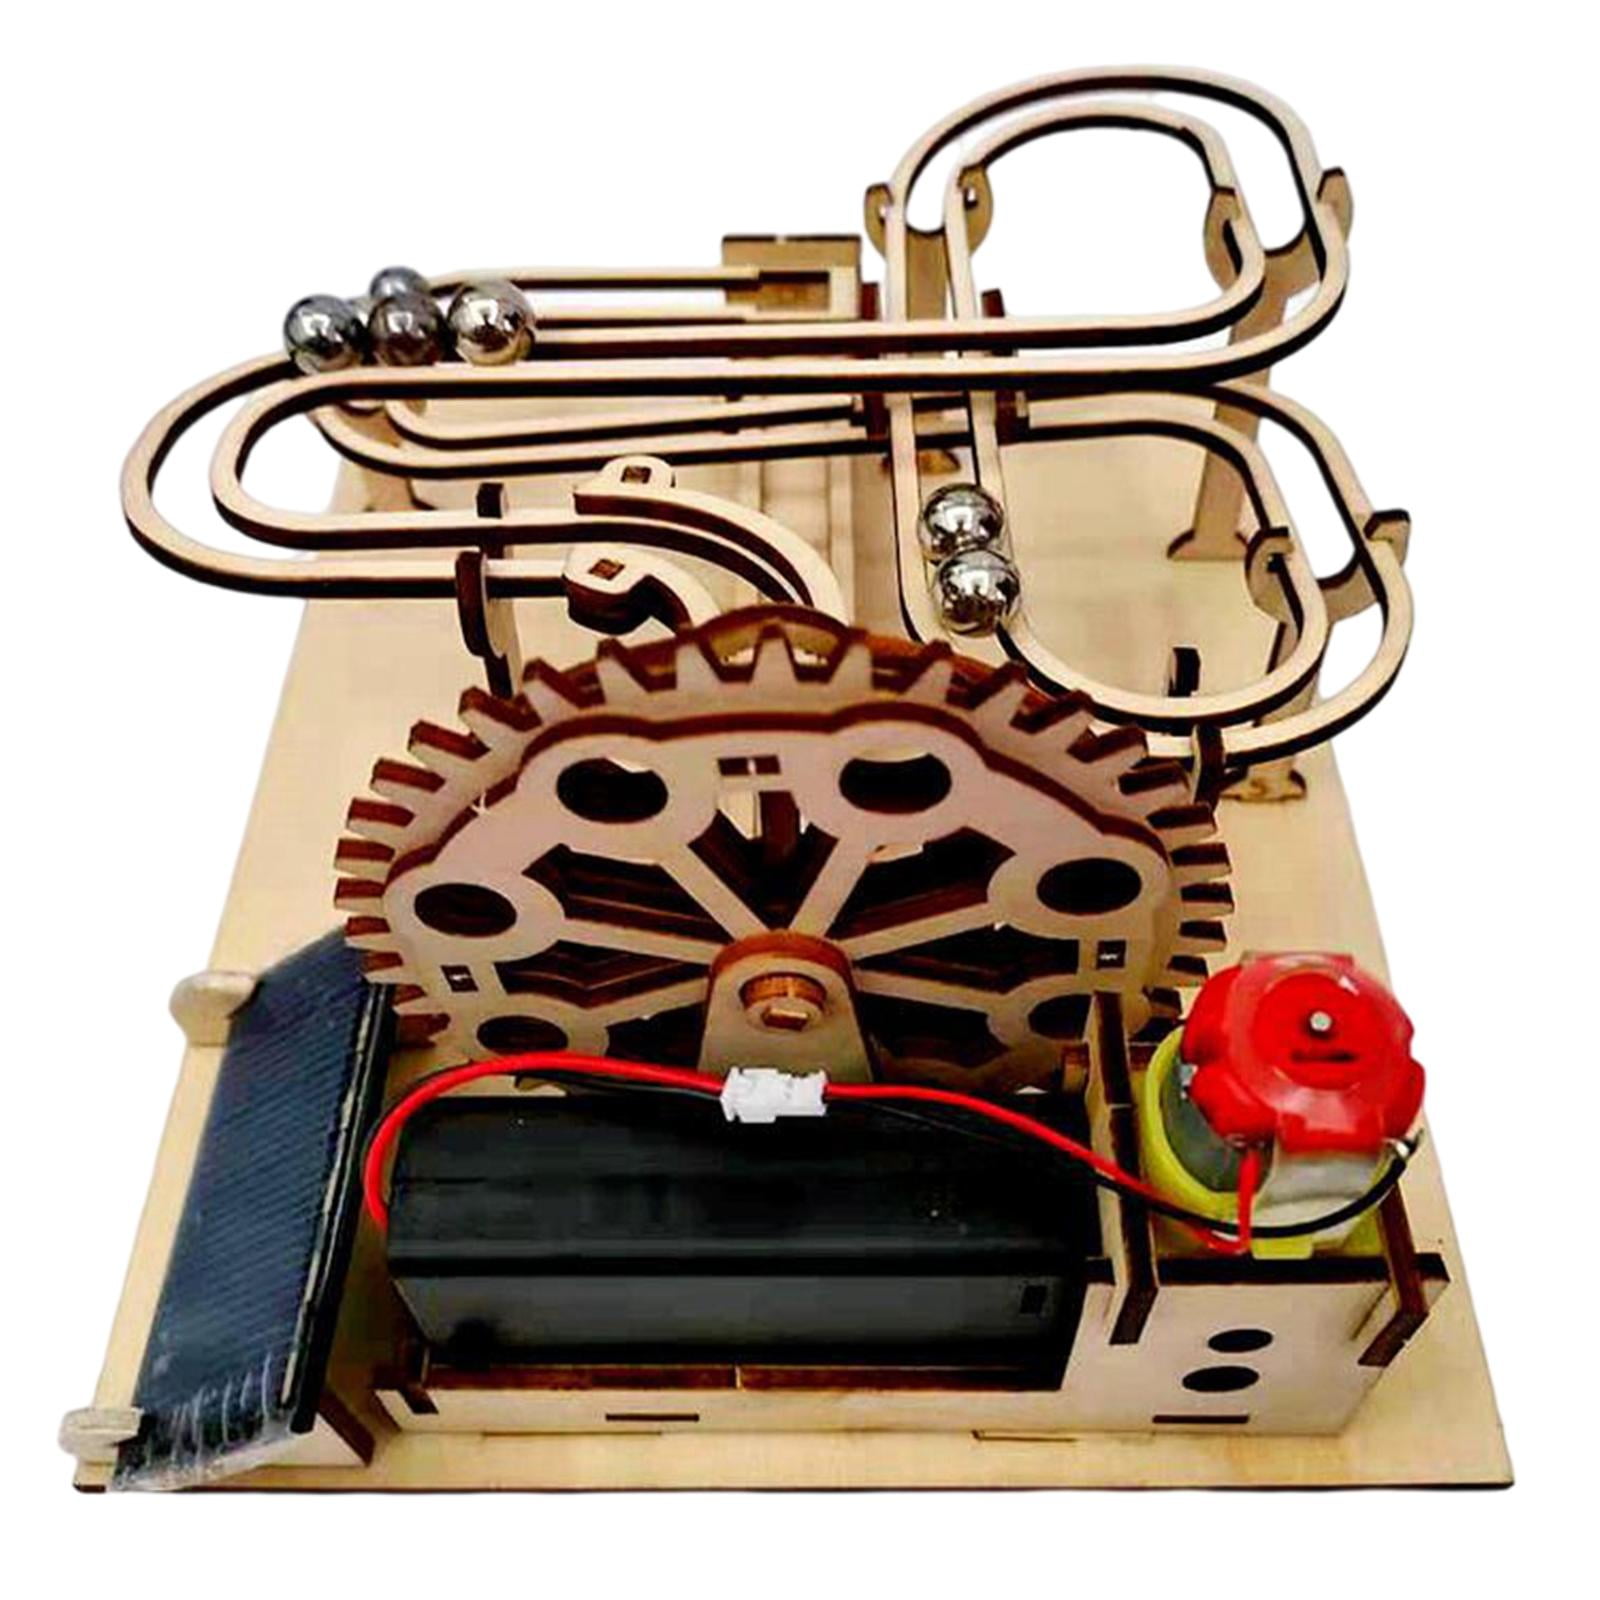 Marble run wood model kit DIY Solar-powered 3D Wooden mechanical puzzle Kit 